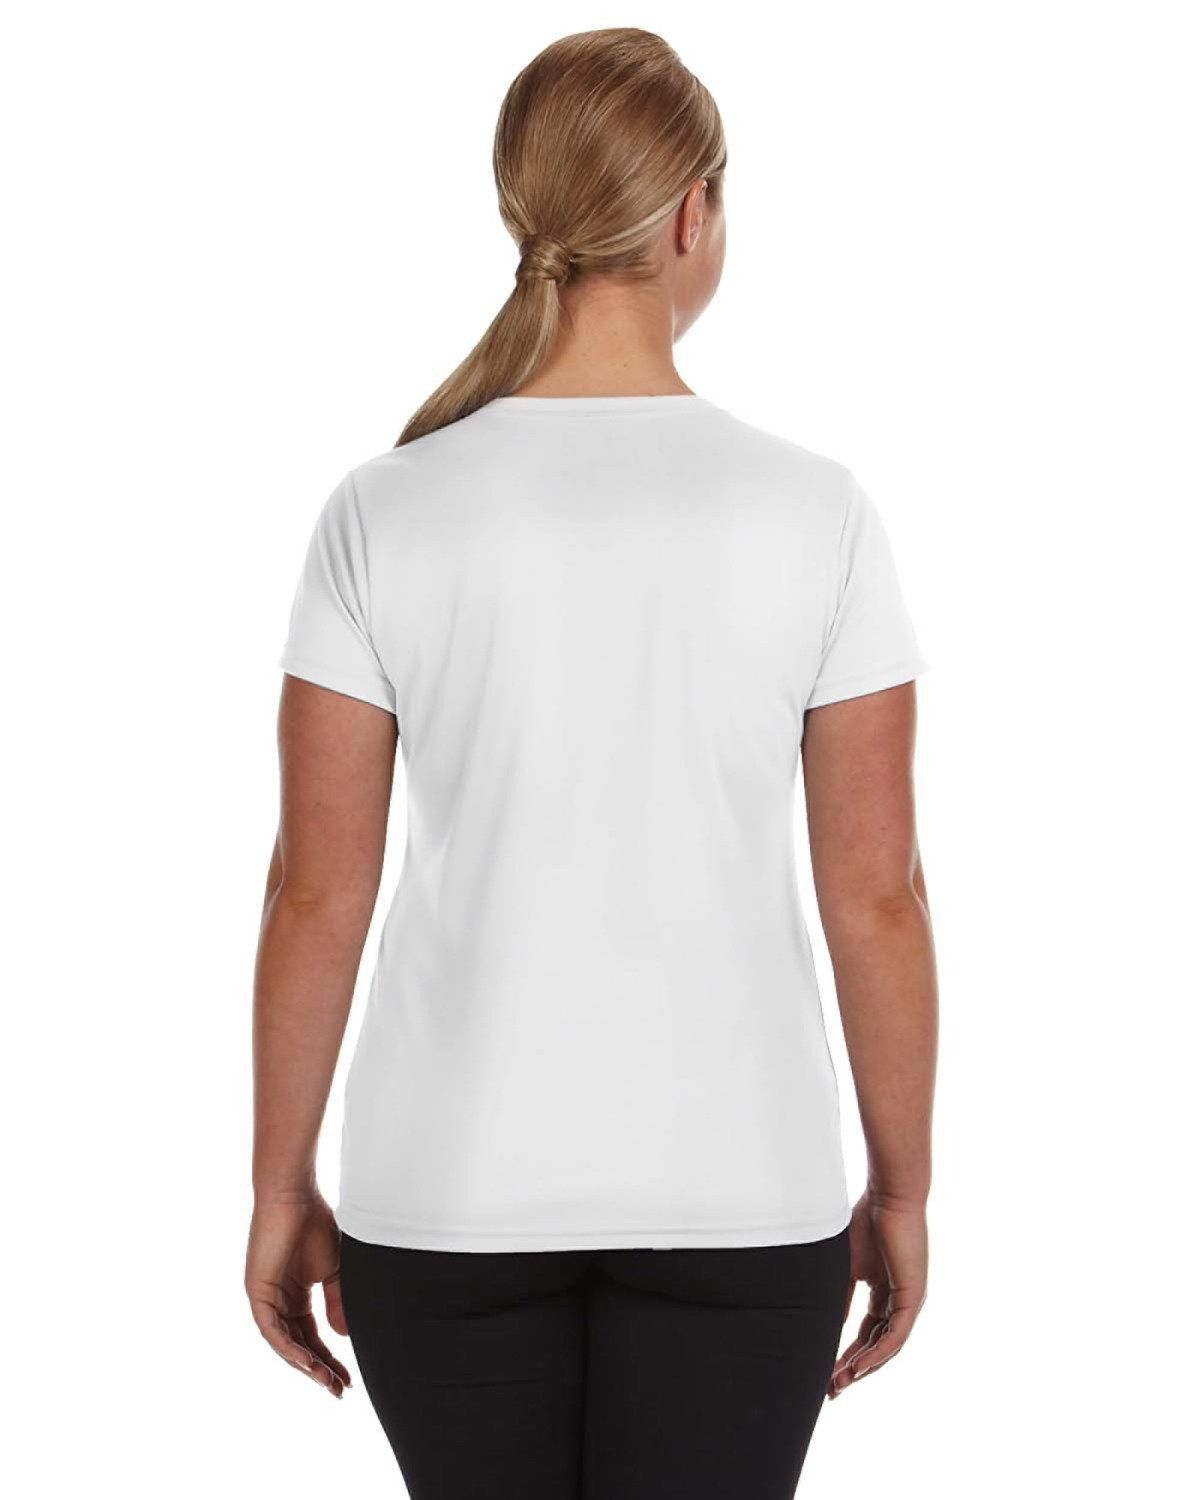 'Augusta Sportswear 1790 Ladies Wicking T-Shirt'